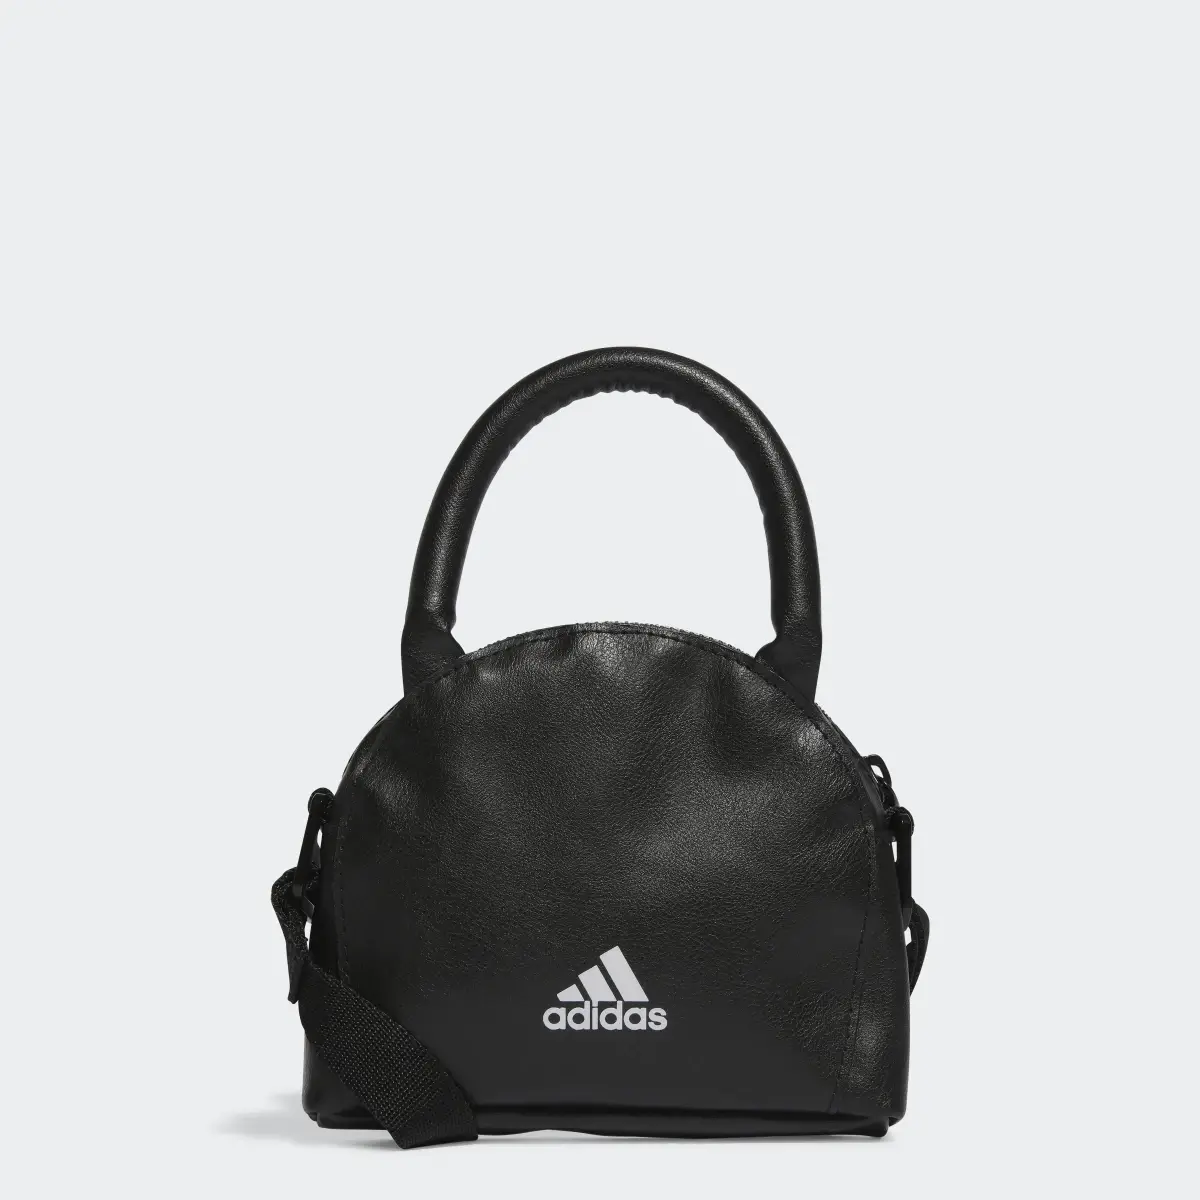 Adidas Petit sac Back to School. 1